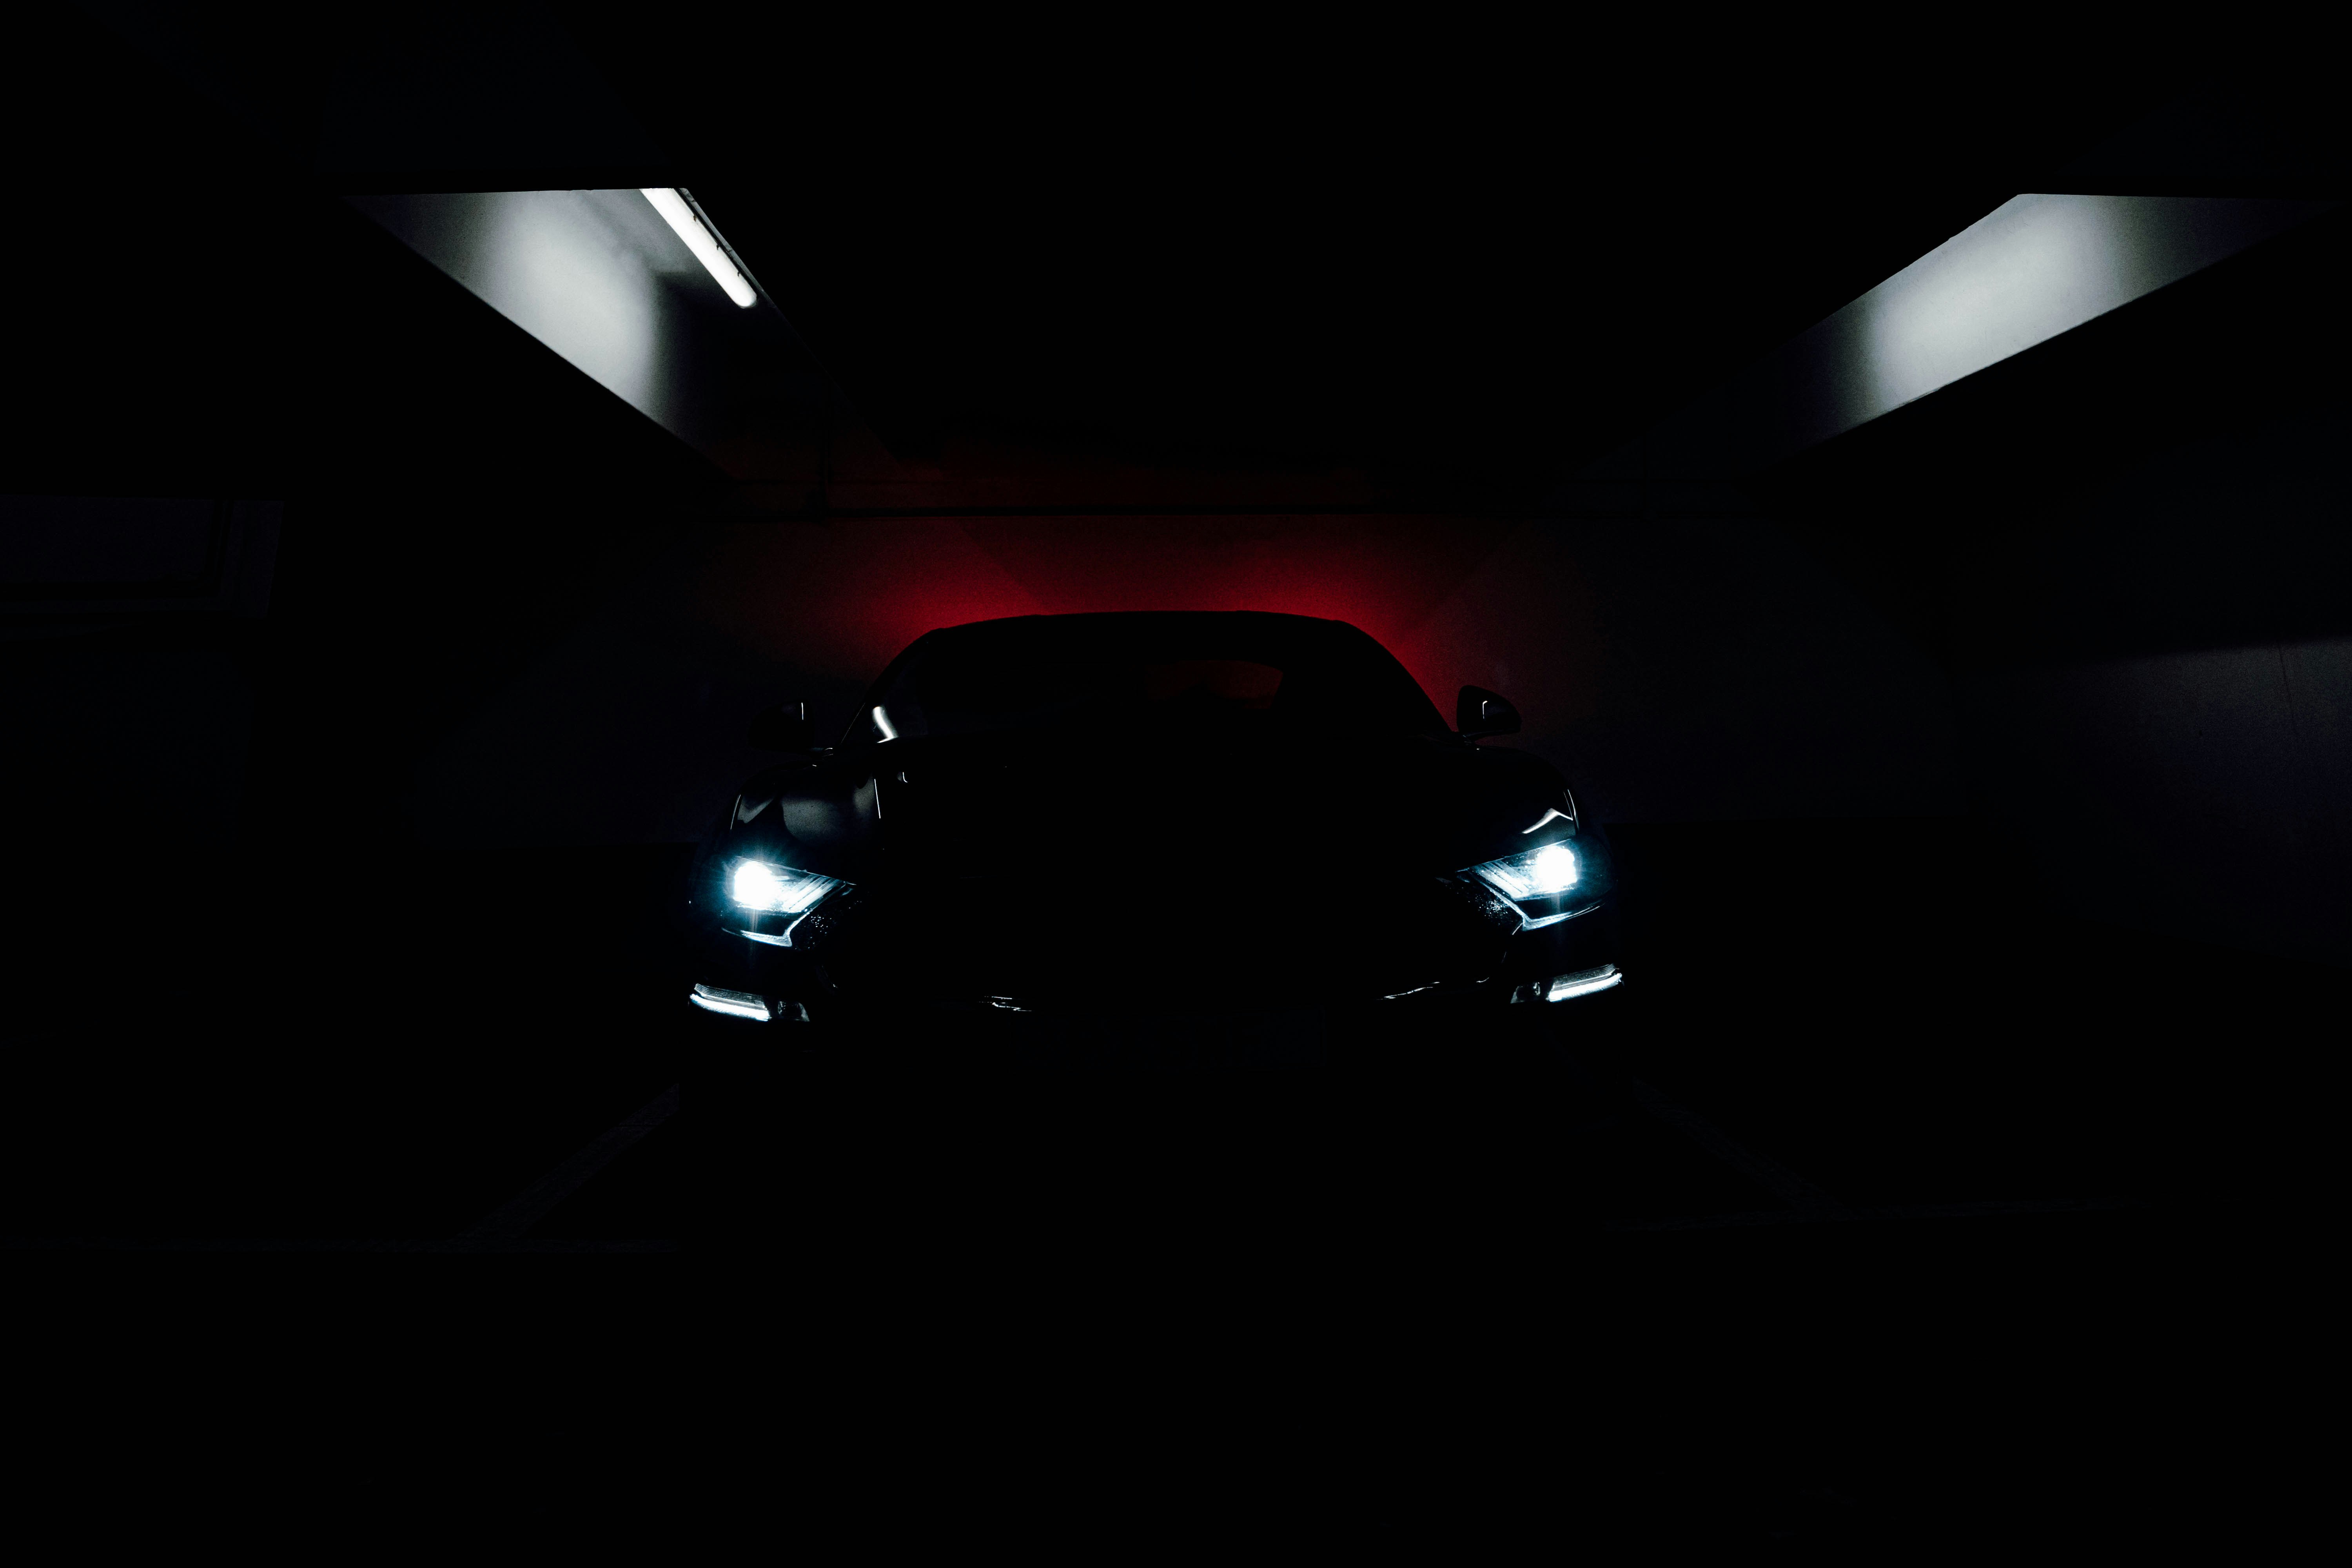 black car in a dark room